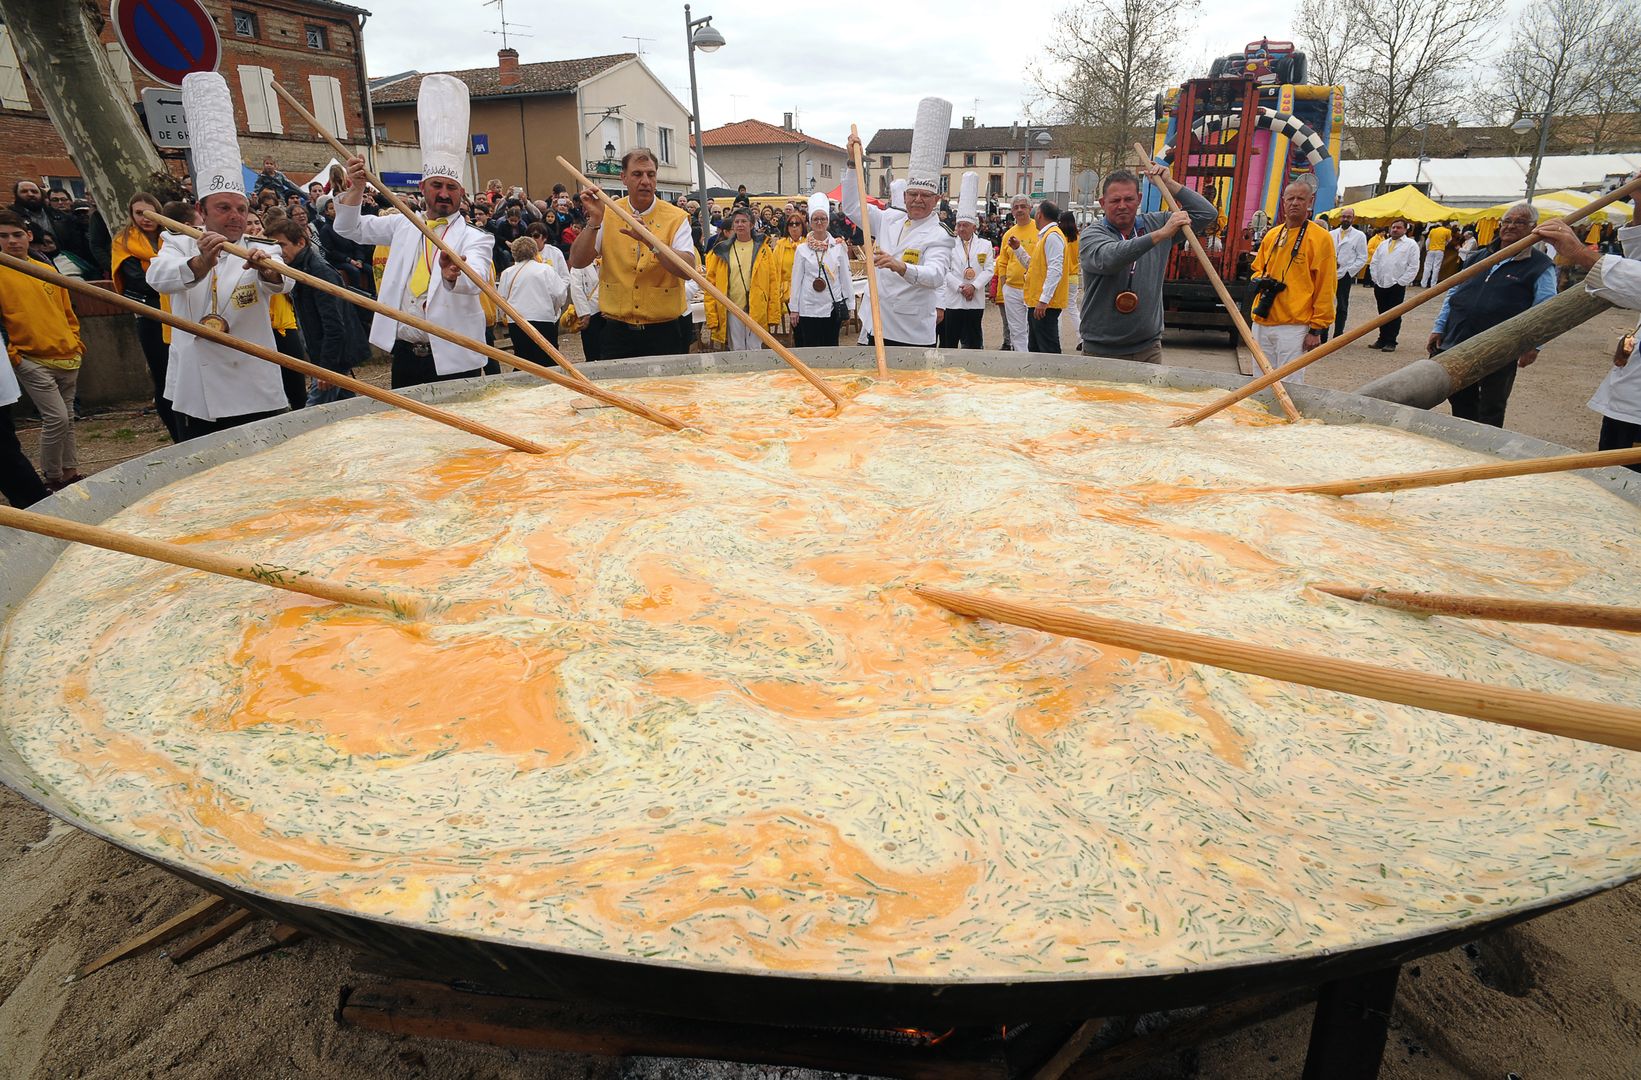 Francuski omlet gigant wykarmił tysiące osób